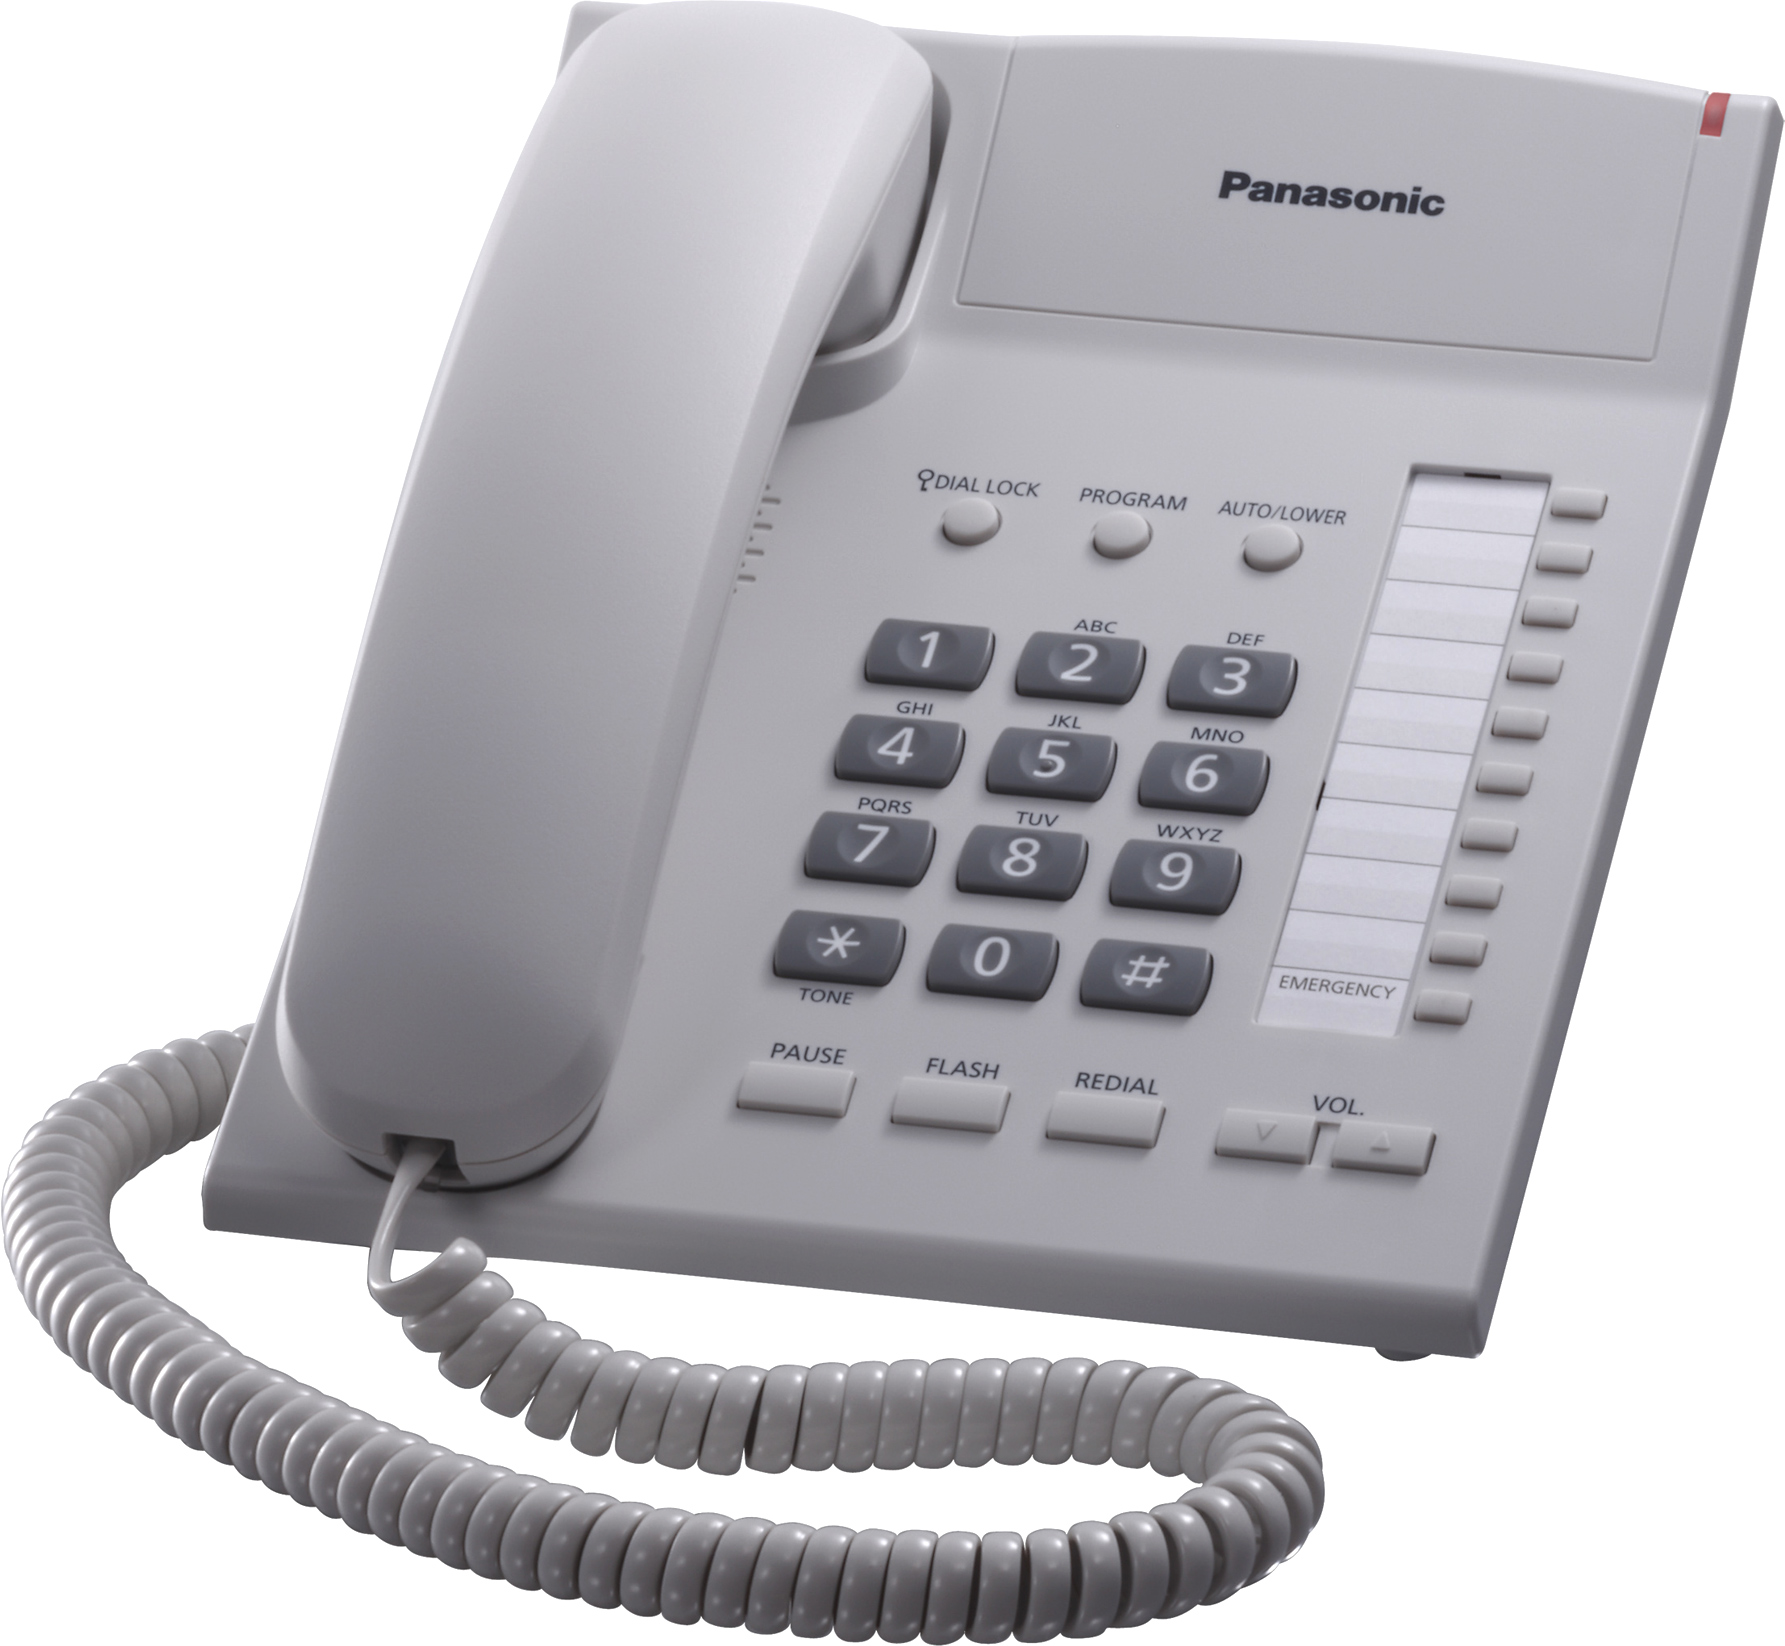 Проводной телефон Panasonic KX-TS2382 (белый)